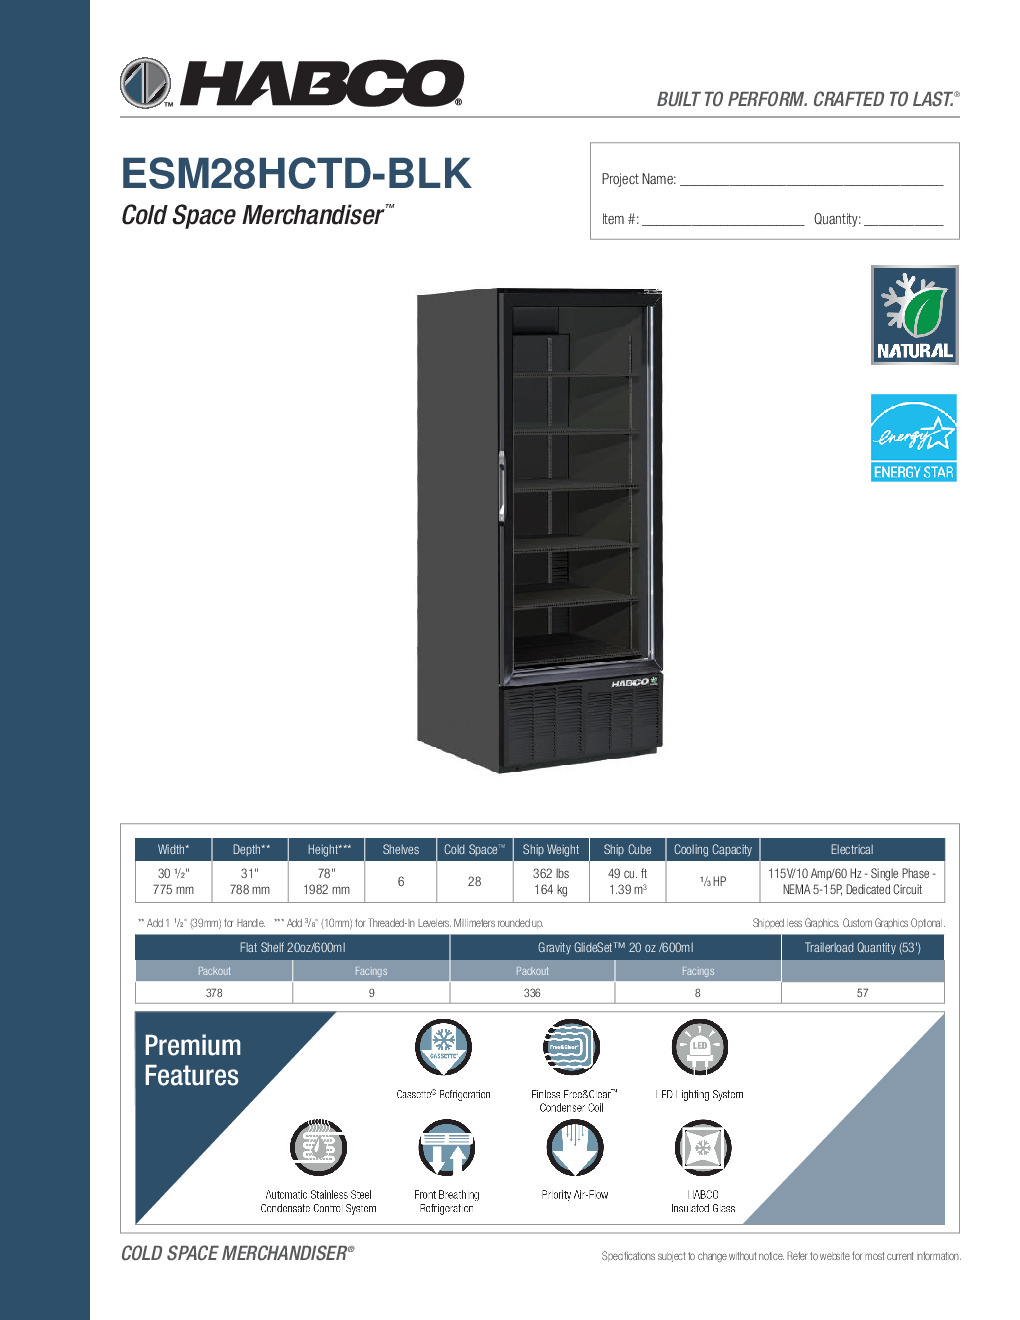 HABCO ESM28HCTD-BLK Merchandiser Refrigerator